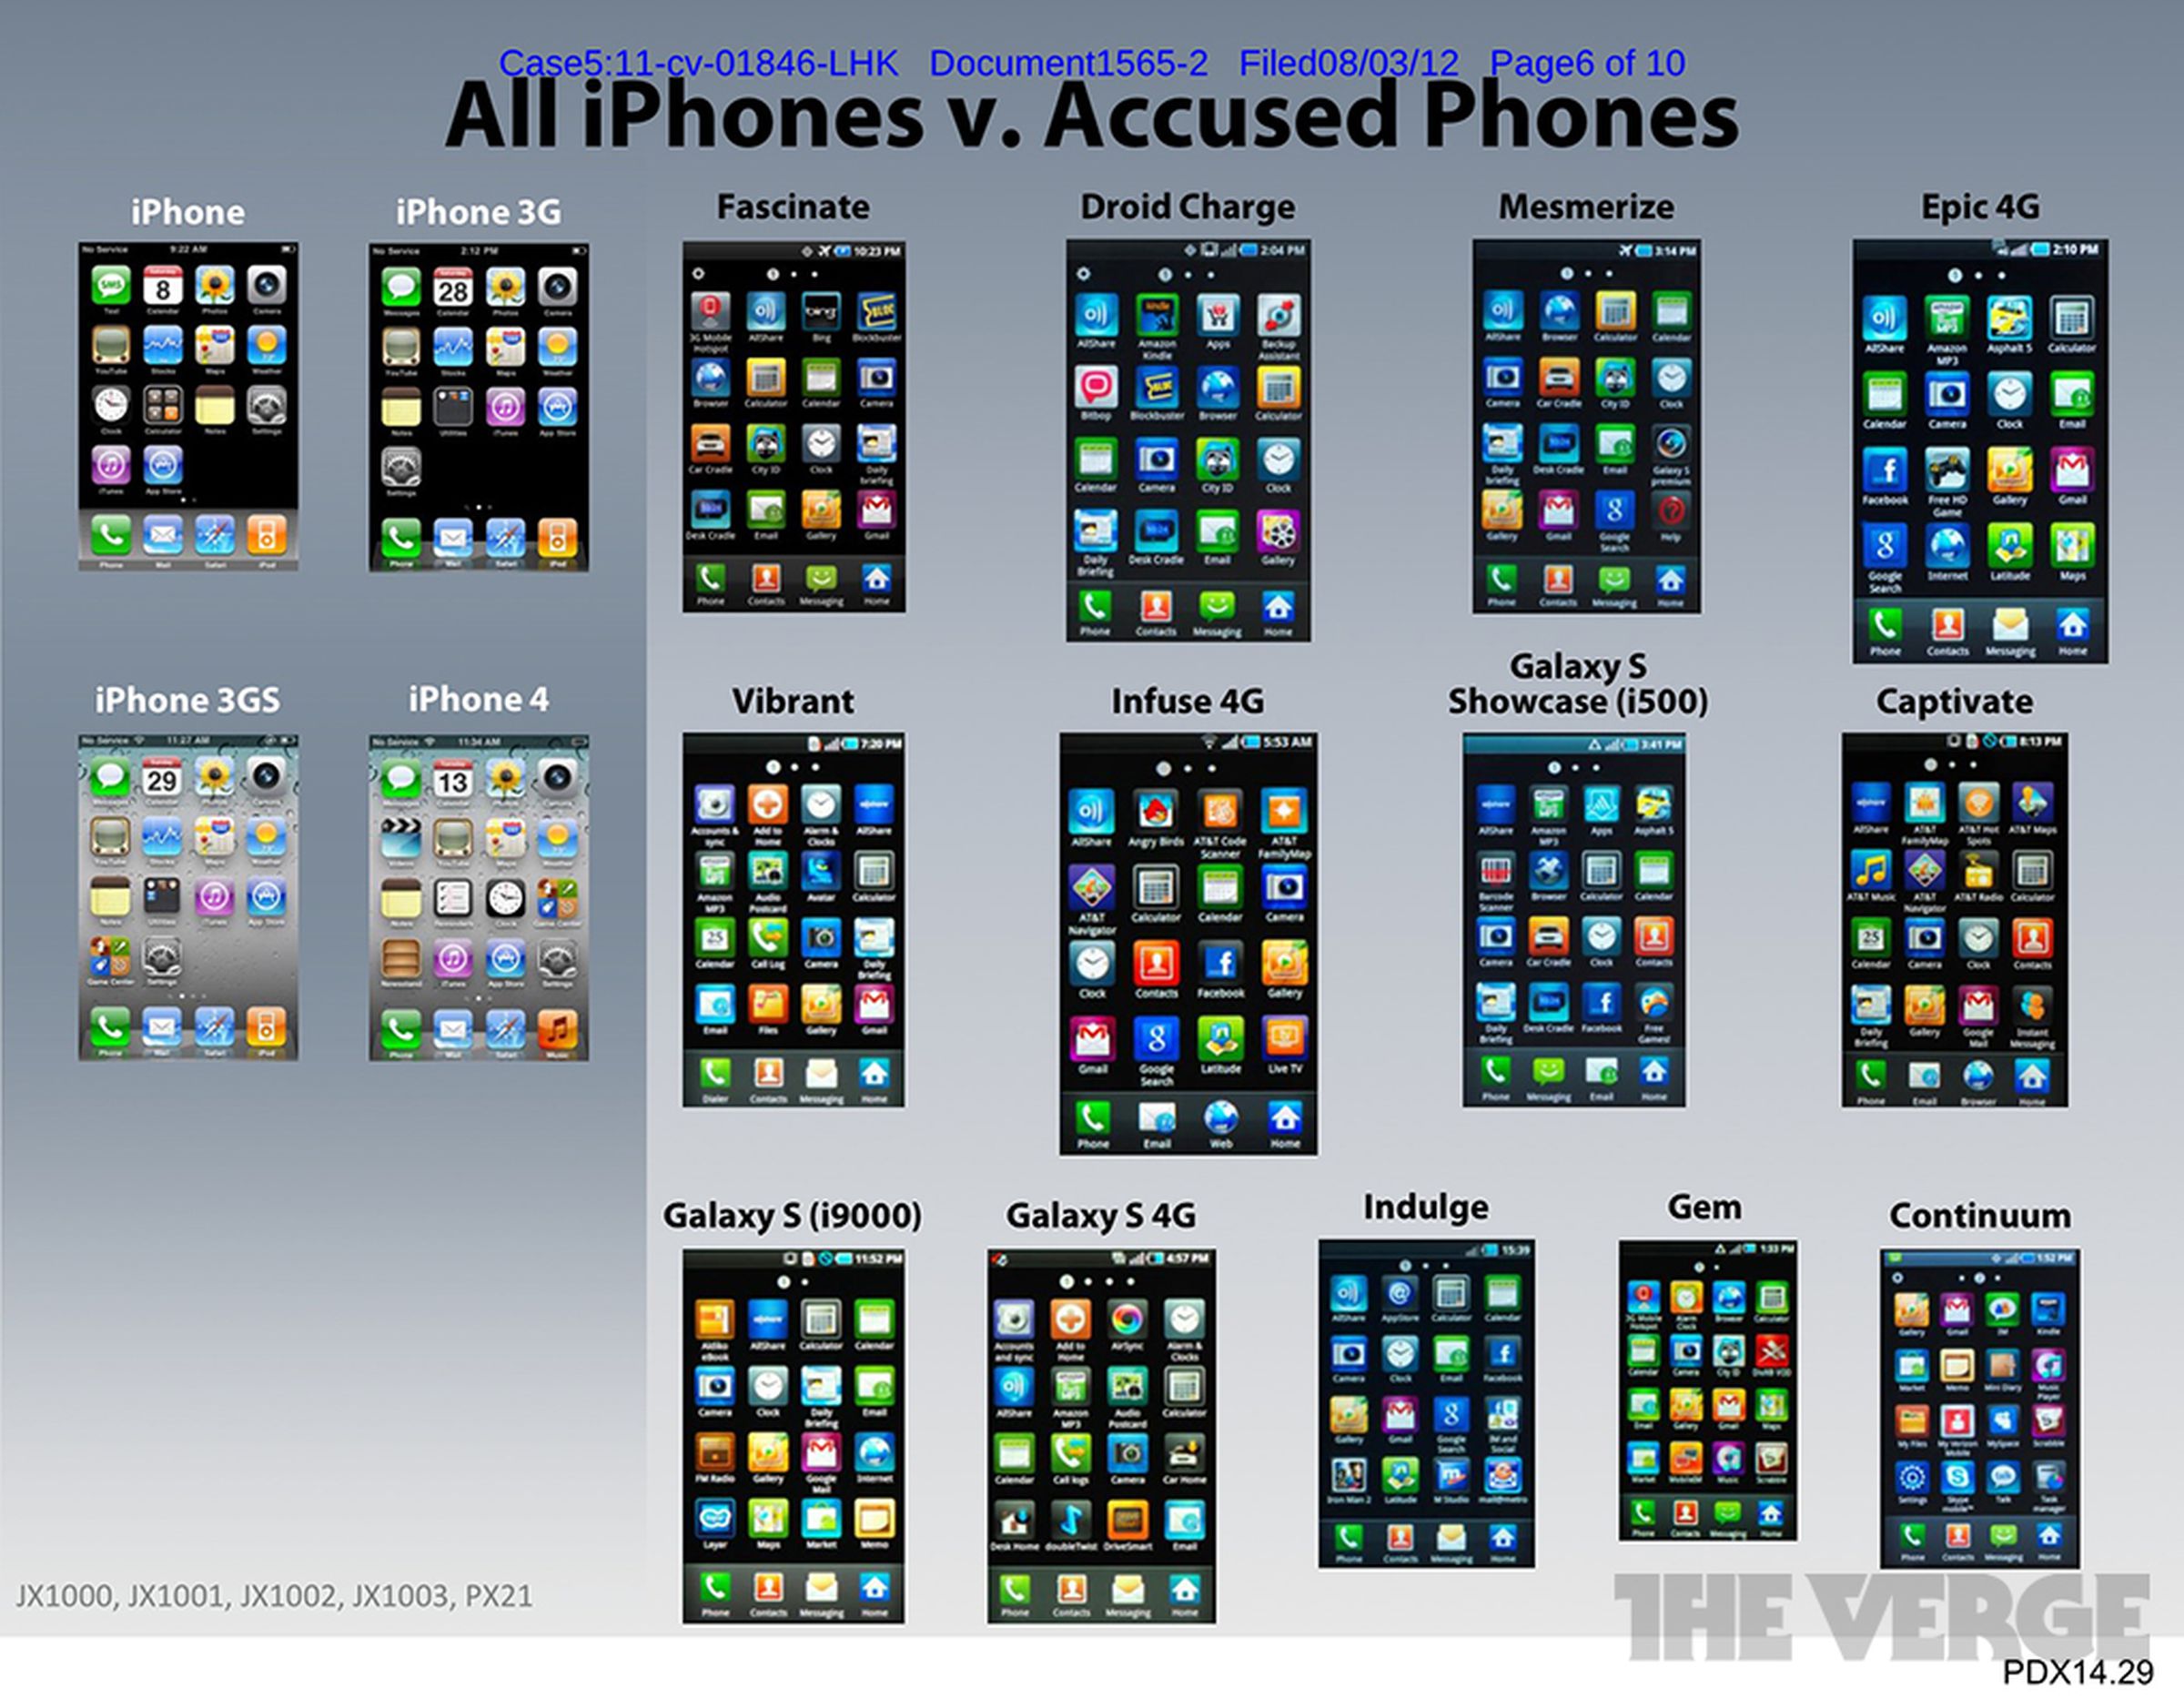 Apple v. Samsung trial evidence: August 7th, 2012